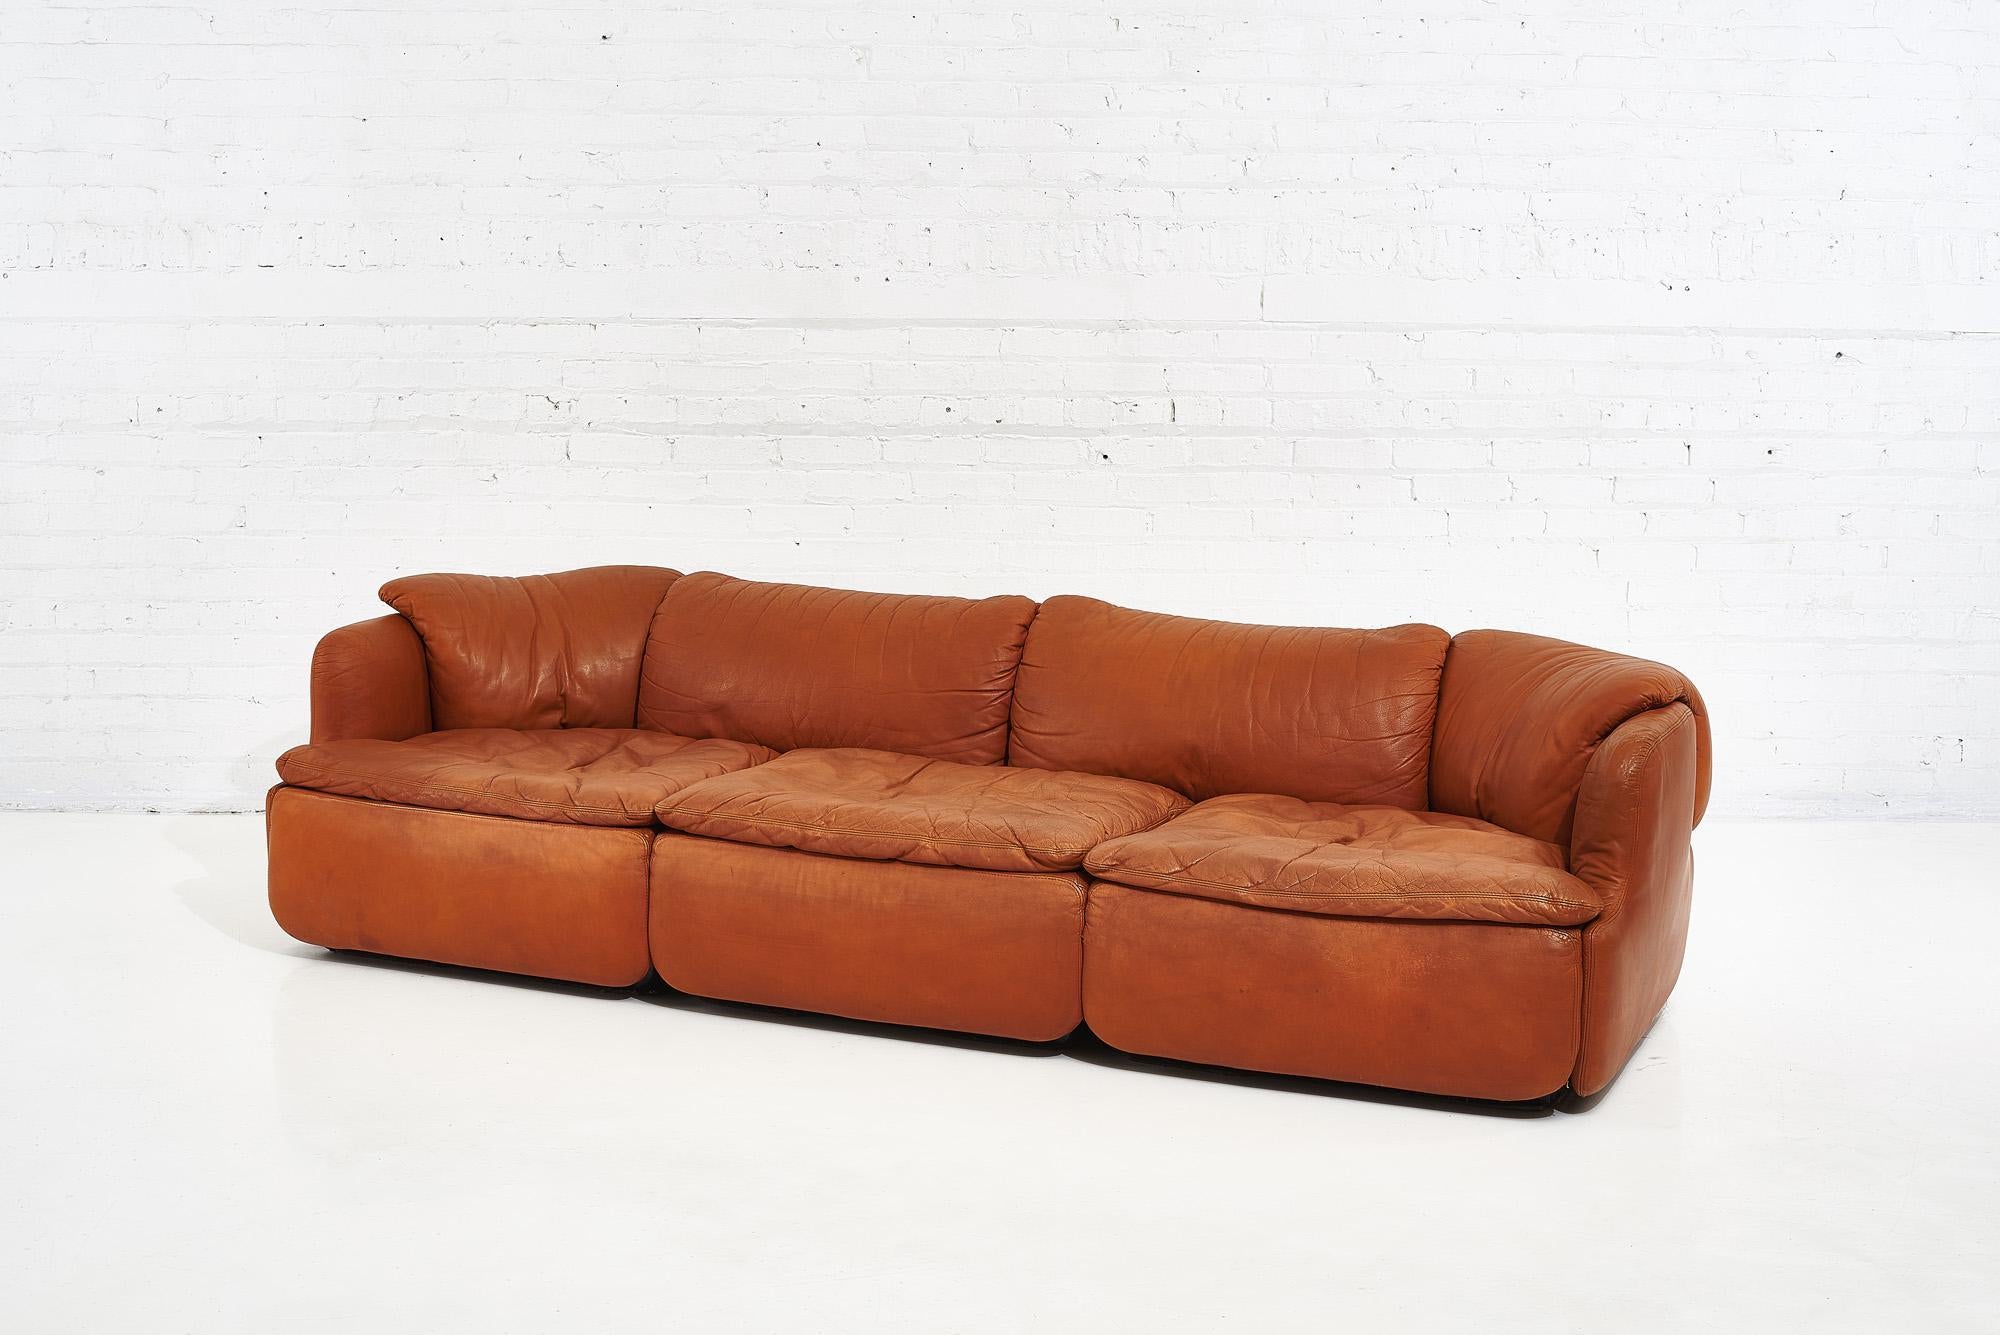 Alberto Rosselli for Saporiti brown leather “Confidential” Sofa, 1970’s. Perfectly “broken in” patina.